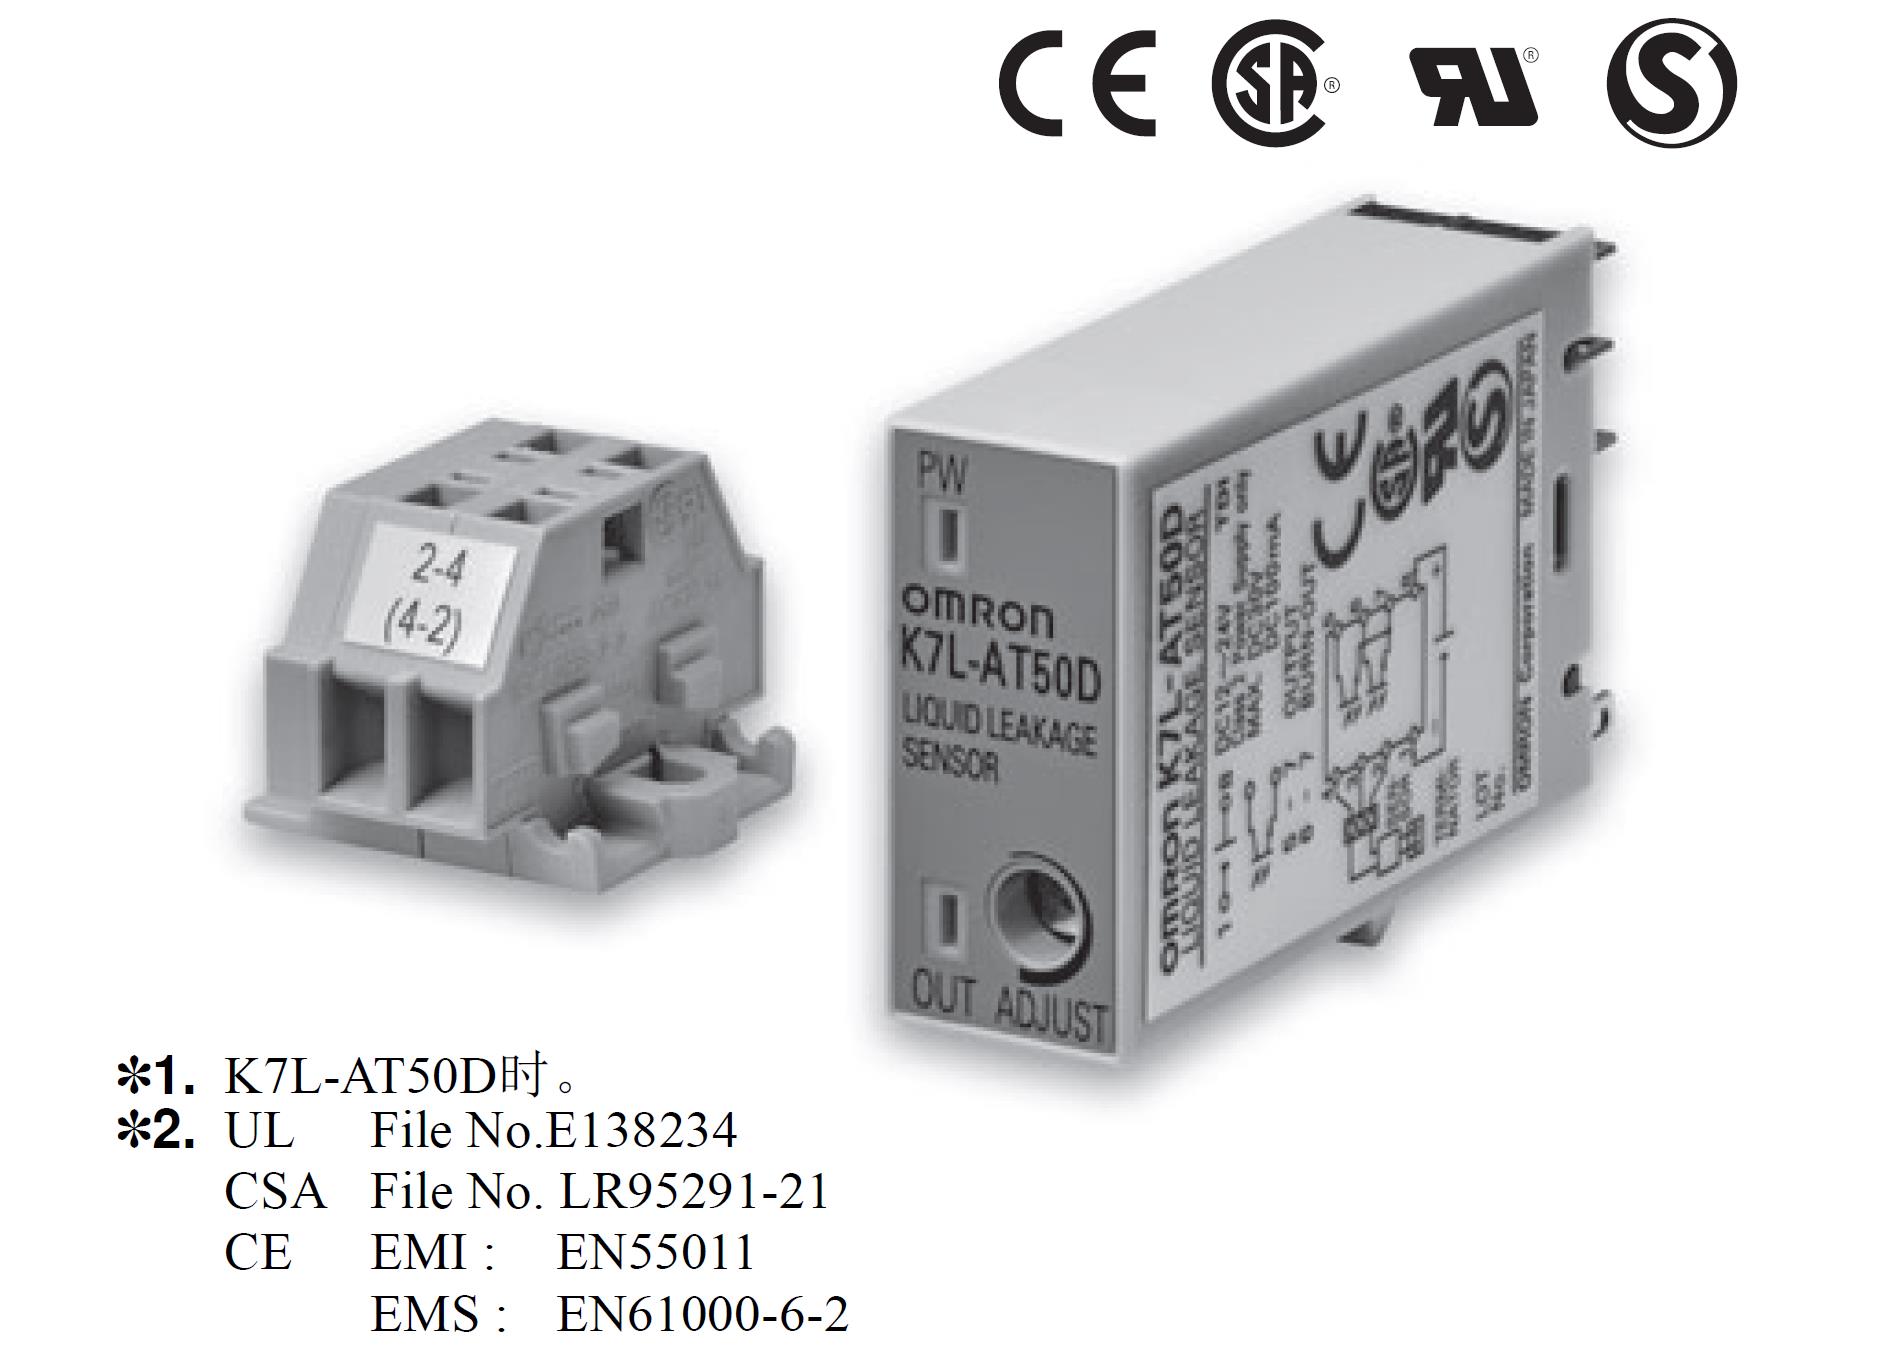 SSCNETⅢ电缆(控制柜外用标准光纤)
K7L-AT50D-S面板表